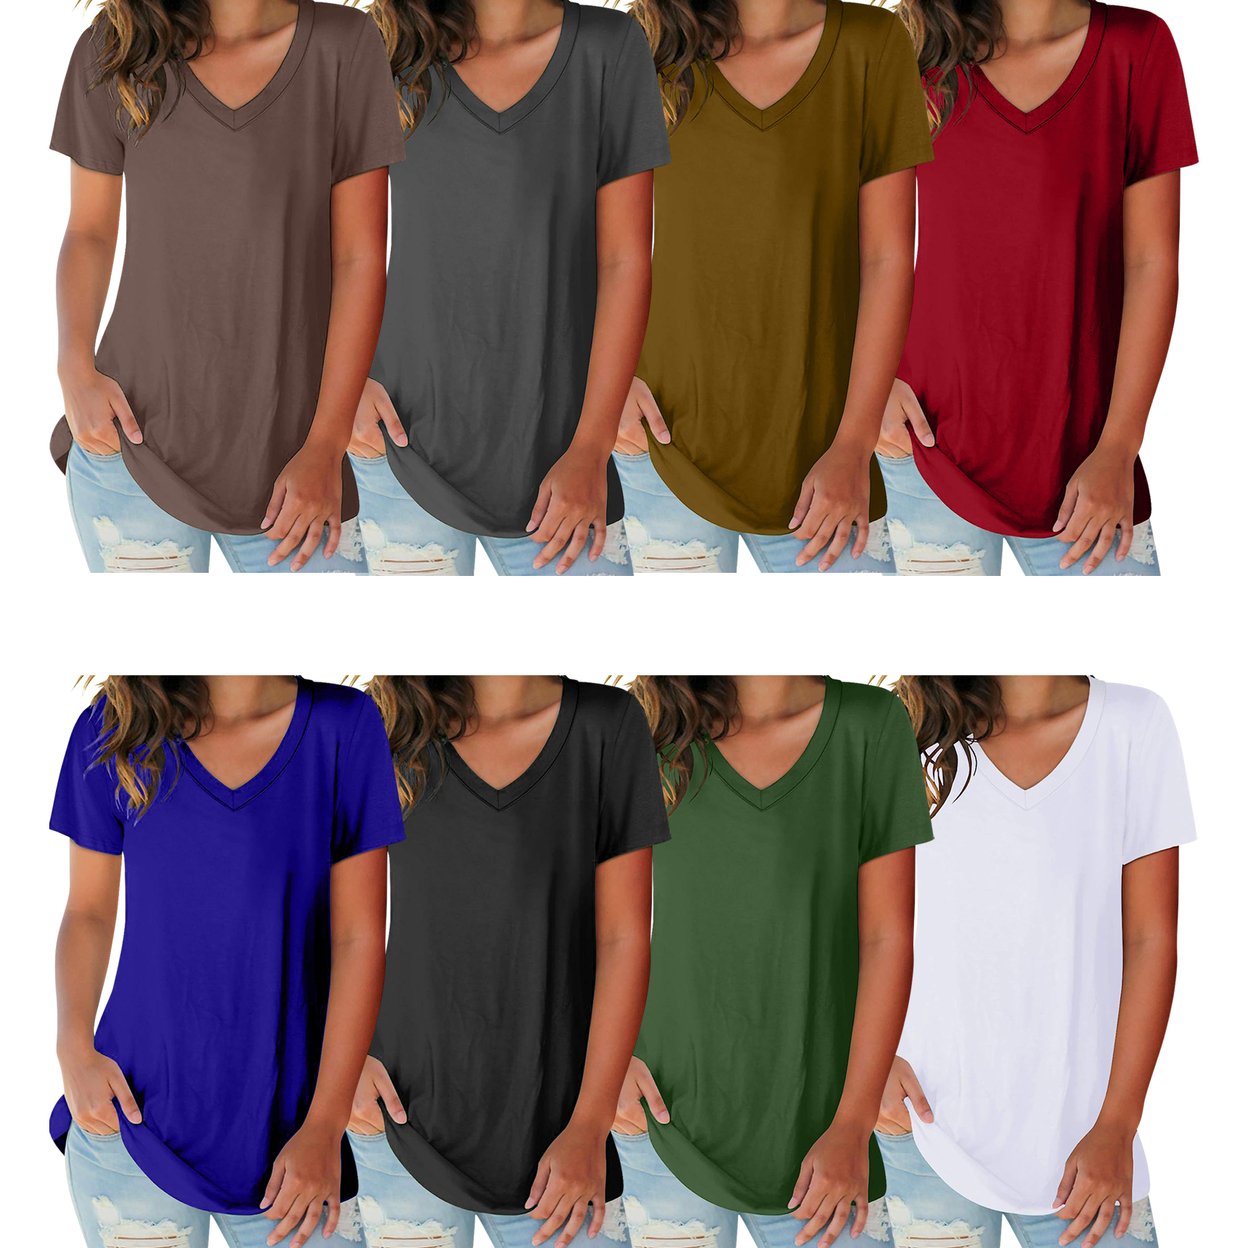 3-Pack: Women's Ultra Soft Smooth Cotton Blend Basic V-Neck Short Sleeve Shirts - Black, White, Grey, Medium